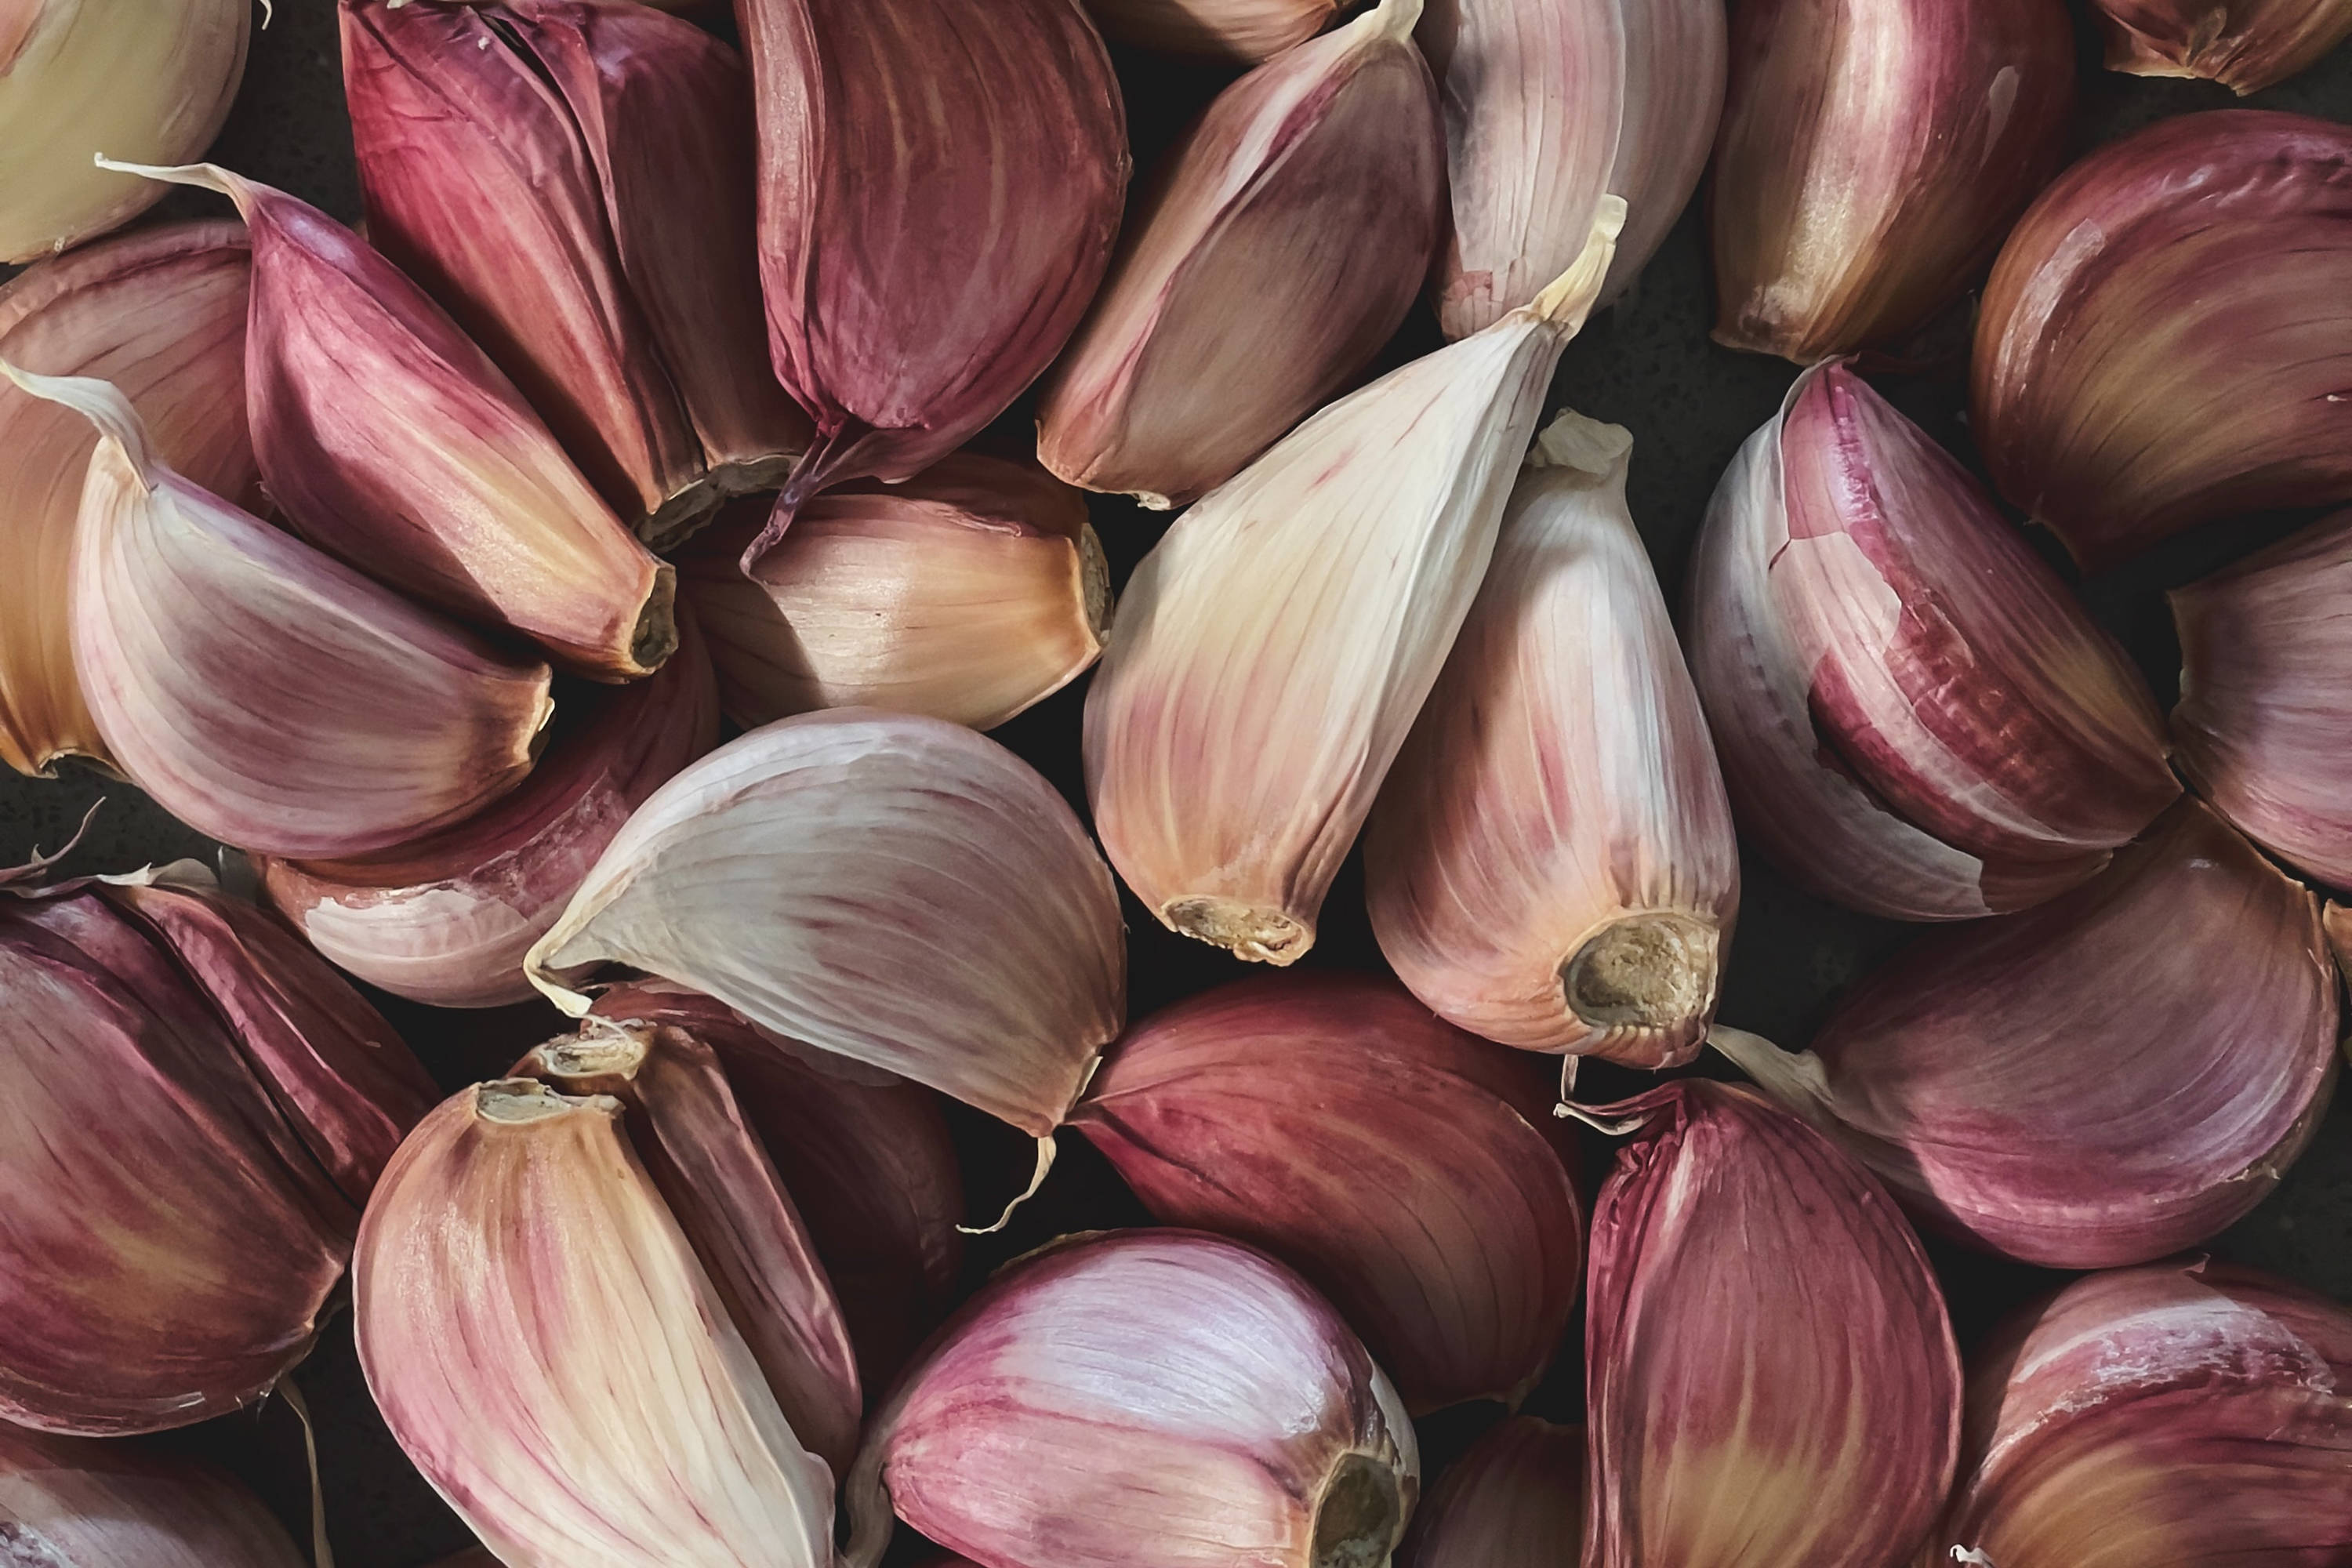 Garlic cloves. Photo: Joe Green / Unsplash.